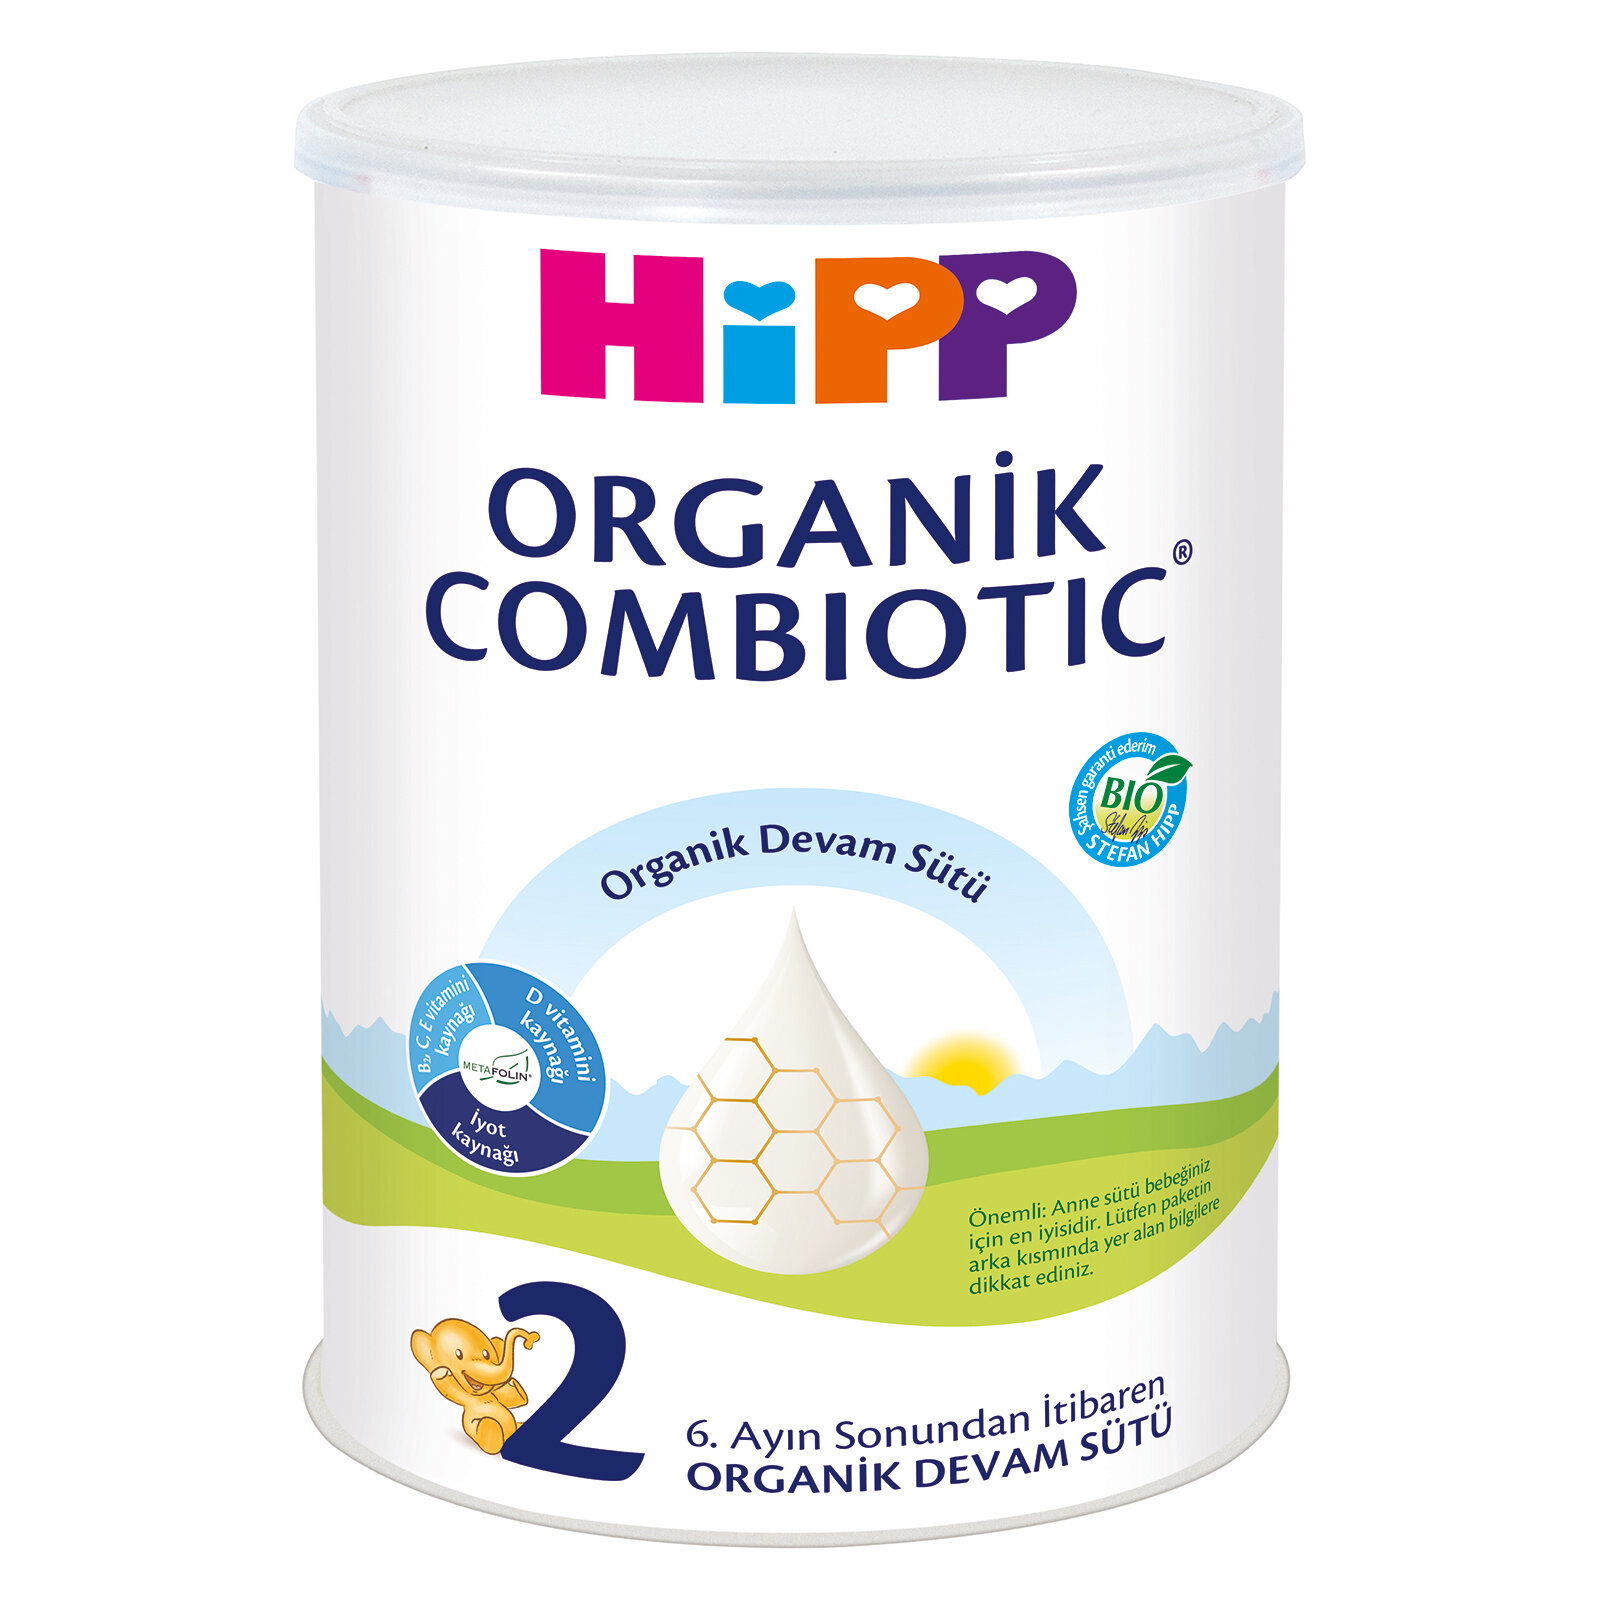 2 Organik Combiotic Devam Sütü 350 gr 6-12 Ay